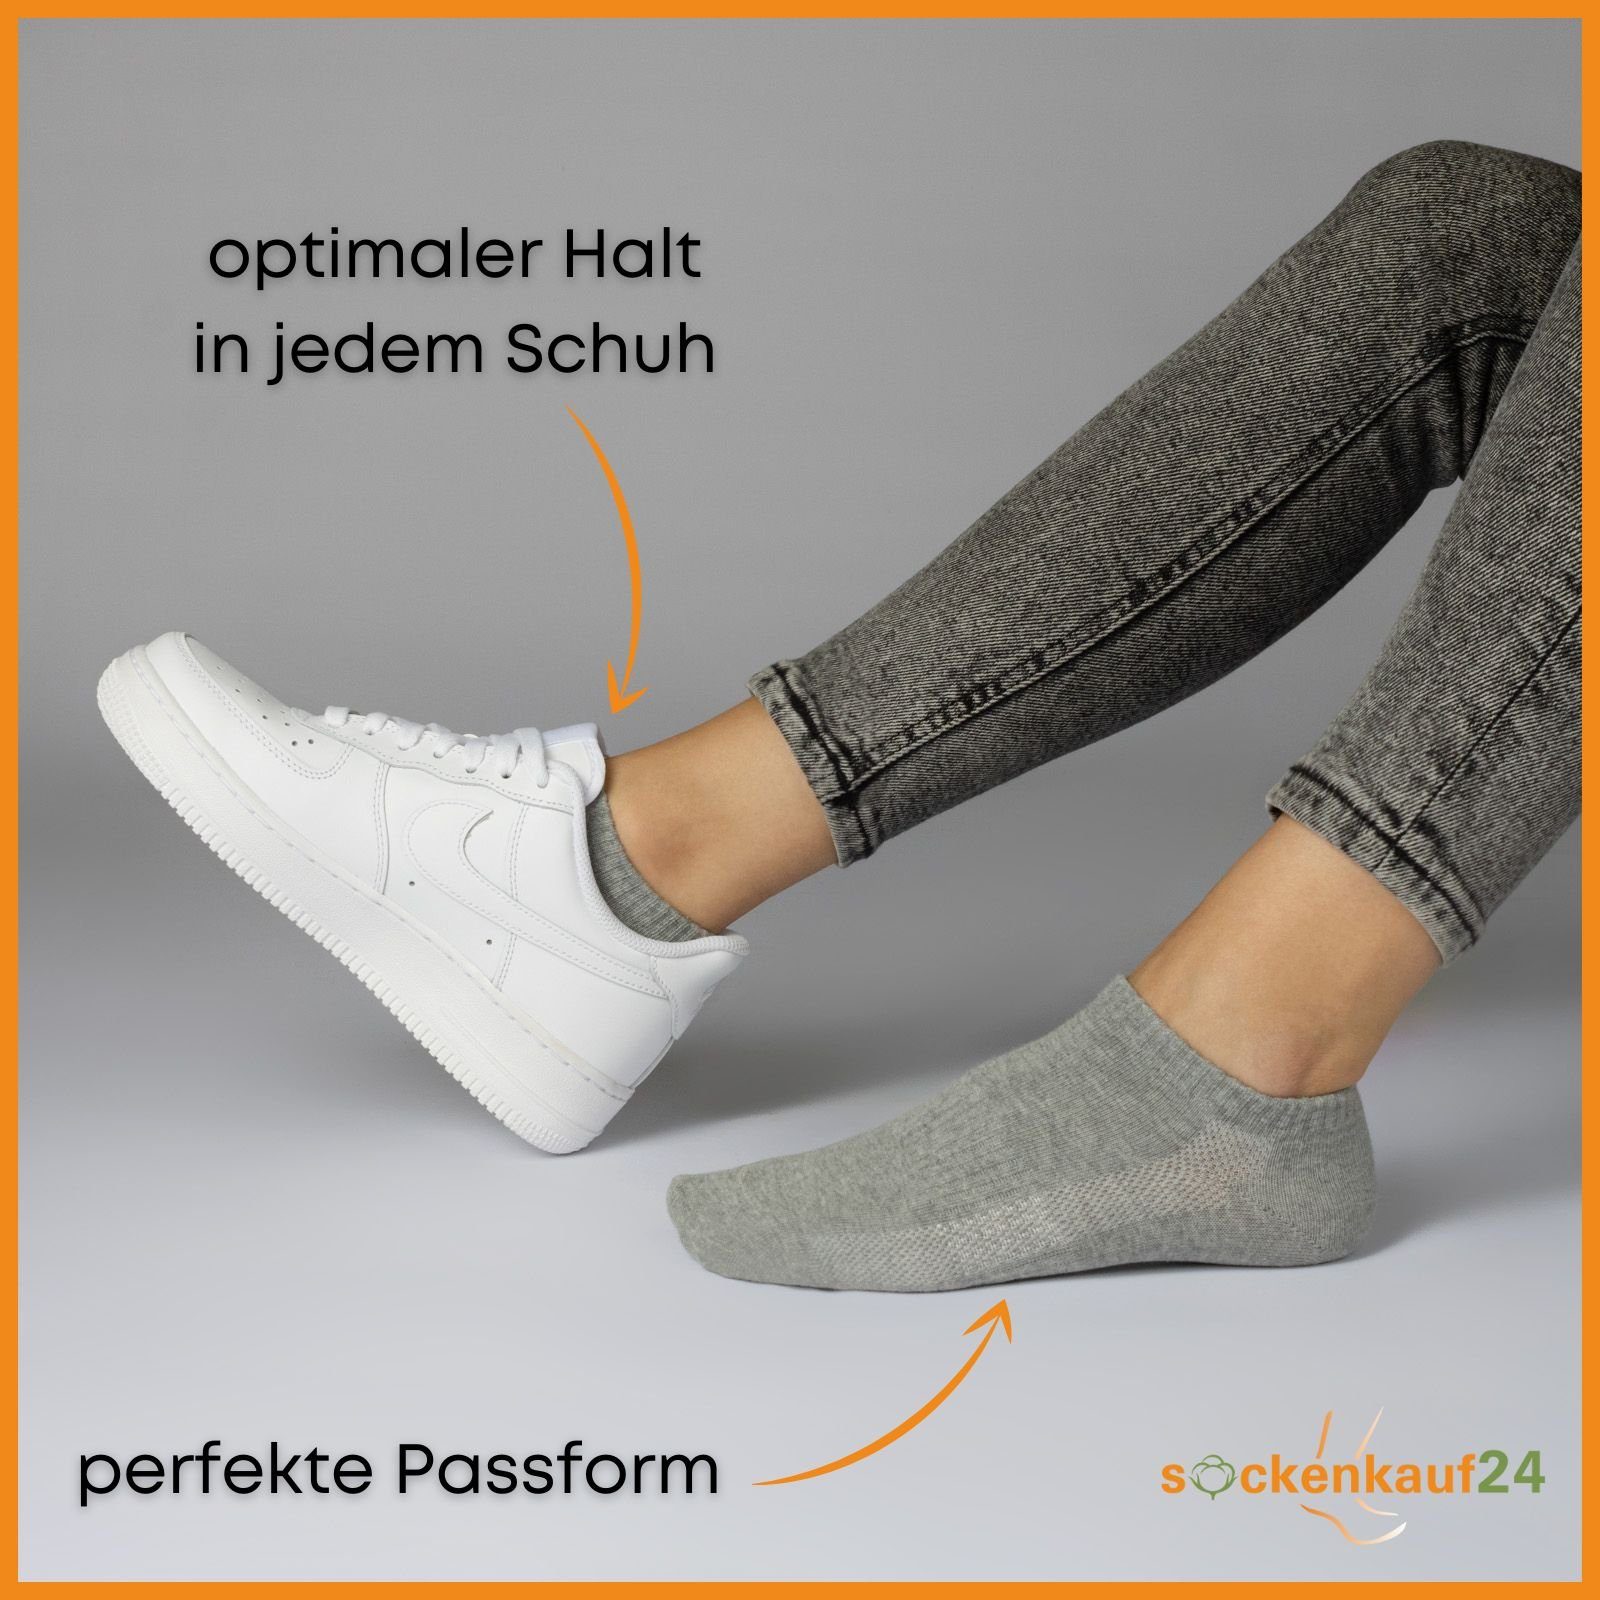 Damen Meshstreifen & Sneakersocken Sneaker sockenkauf24 10 Grau Herren Paar Socken Premium WP mit